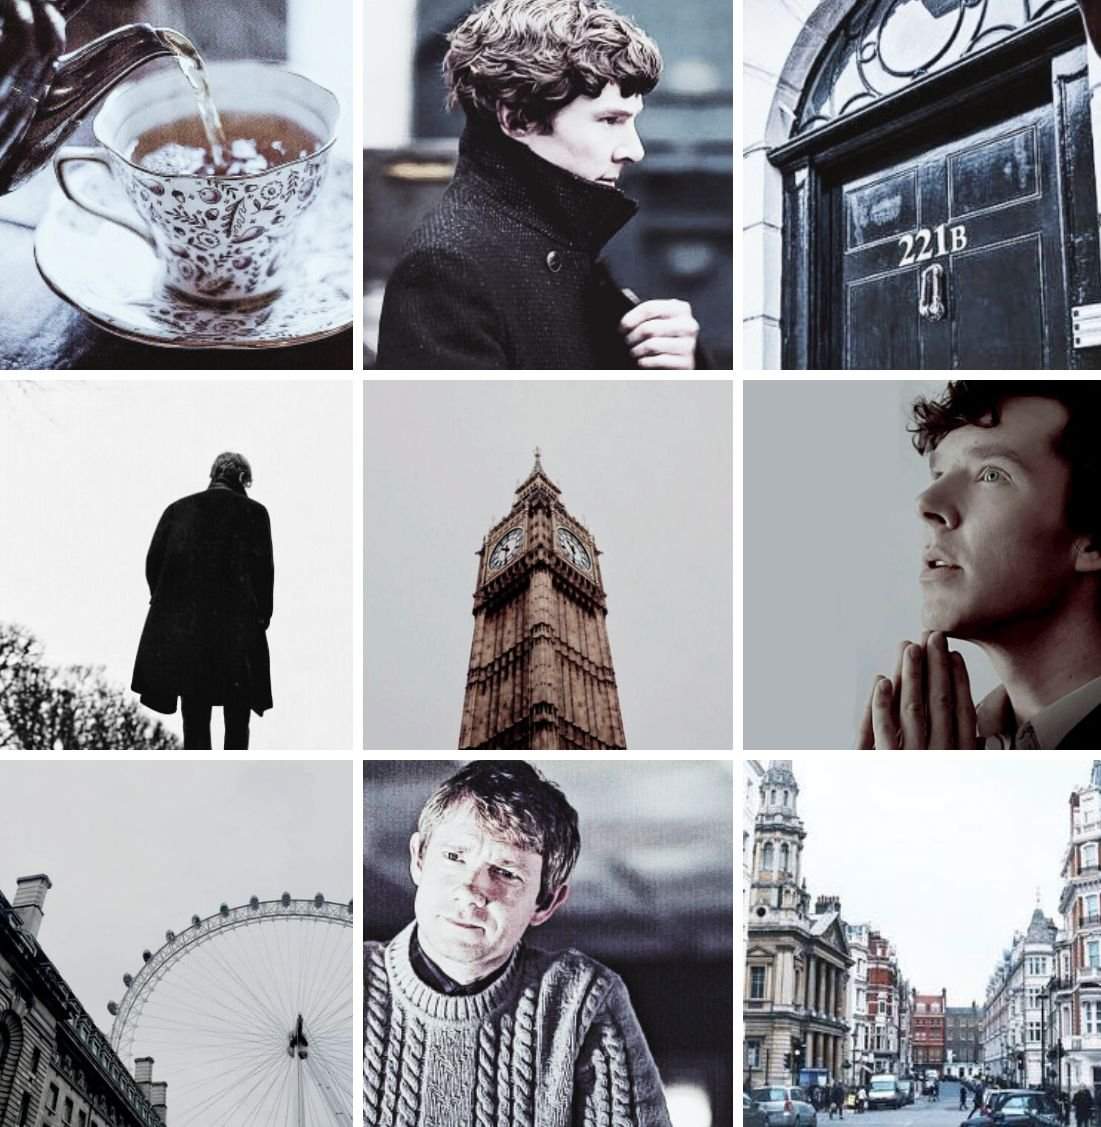 ᗯᗴᏞᑕᝪᗰᗴ Ꭲᝪ ᗰᎩ ᗷᏞᝪᏀ | Шерлок|Sherlock Amino.